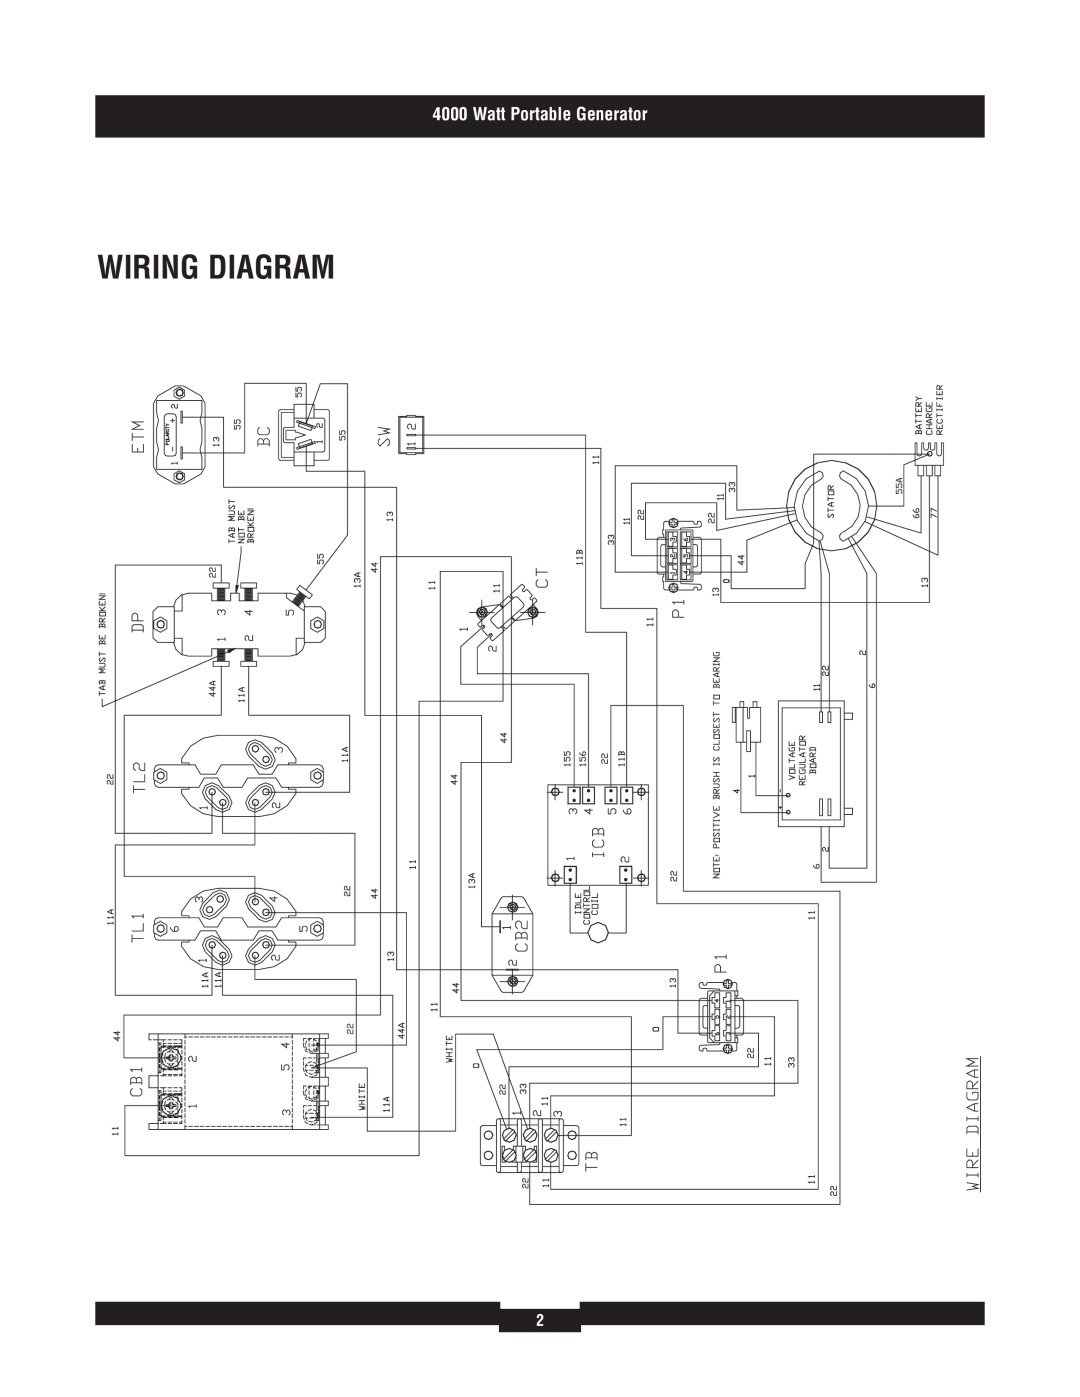 Briggs & Stratton 030335 manual Wiring Diagram, Watt Portable Generator 